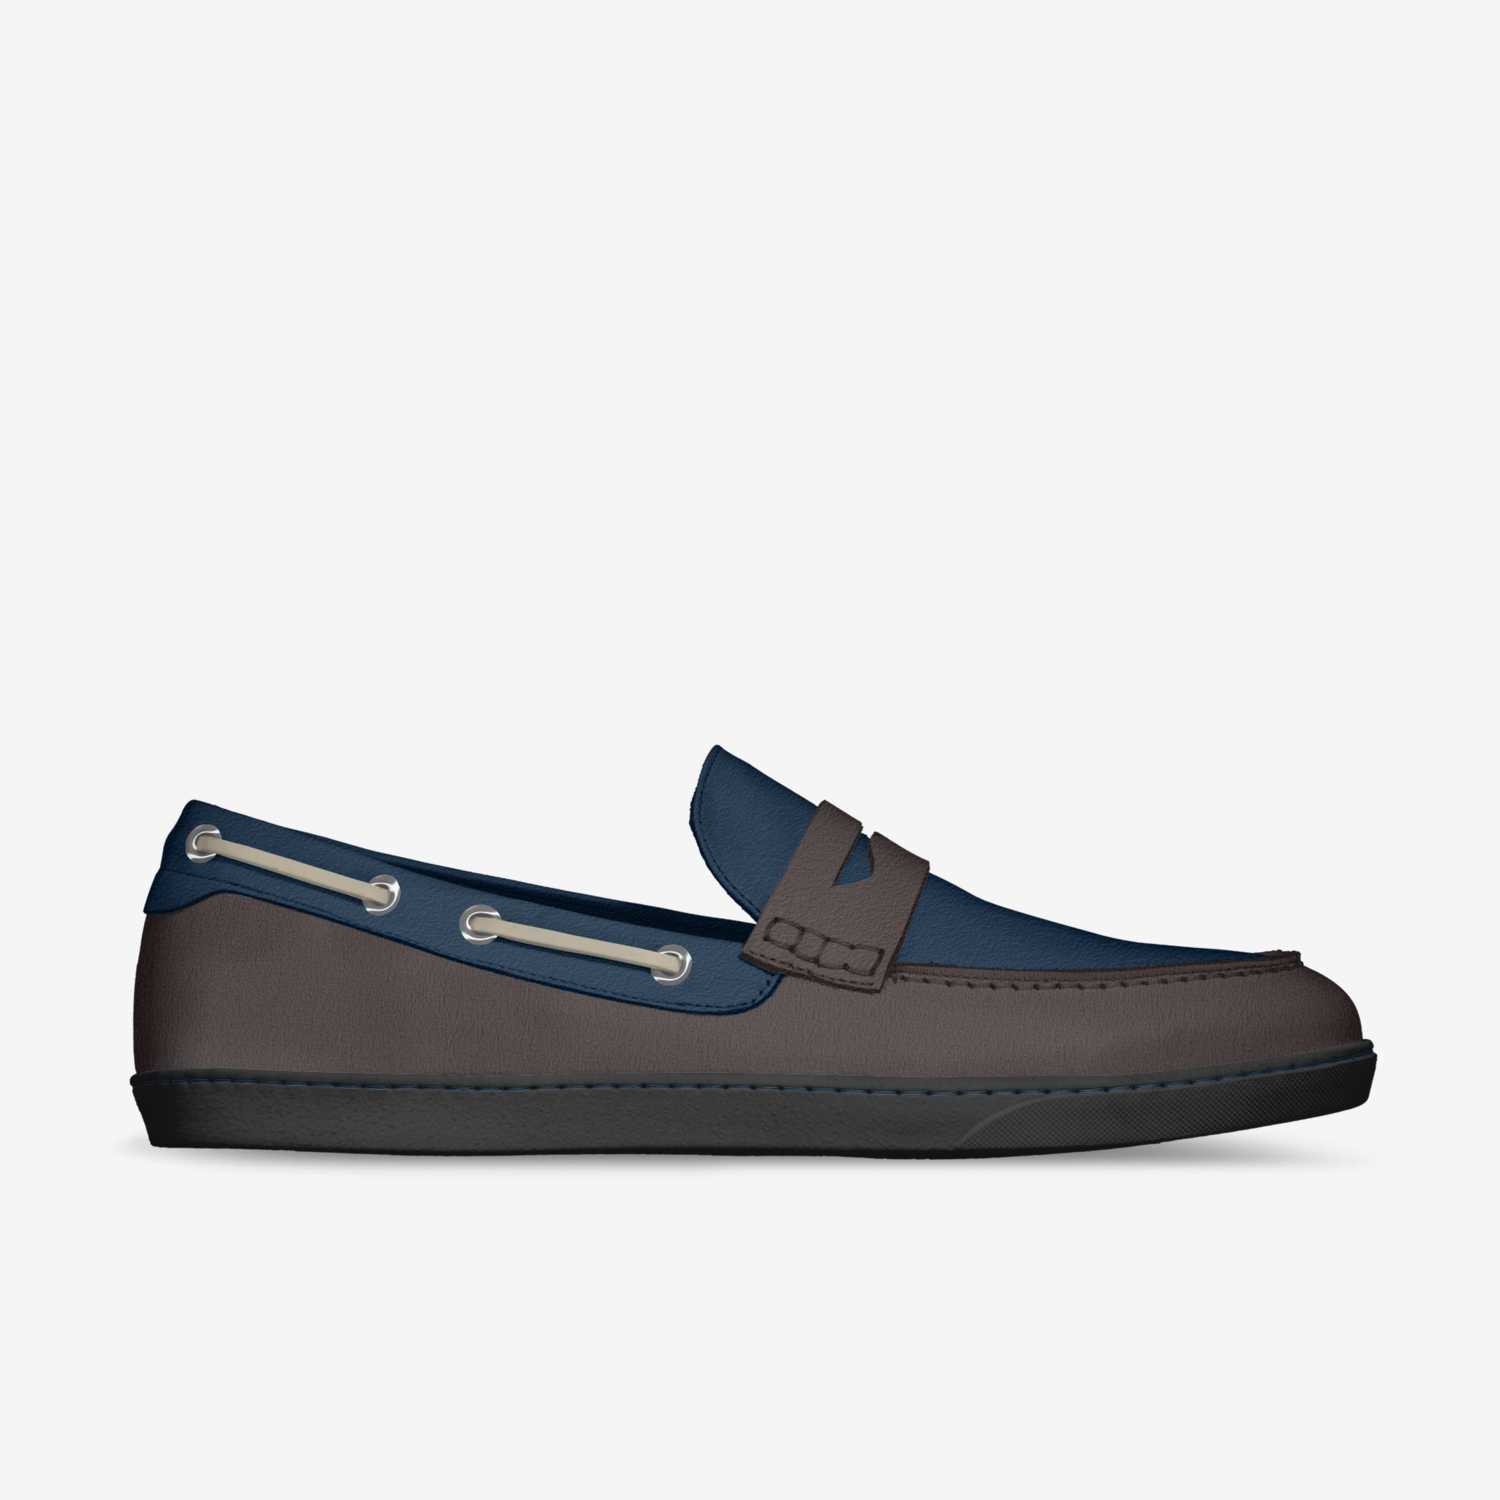 OJ's shoes | A Custom Shoe concept by Oliver Jersild